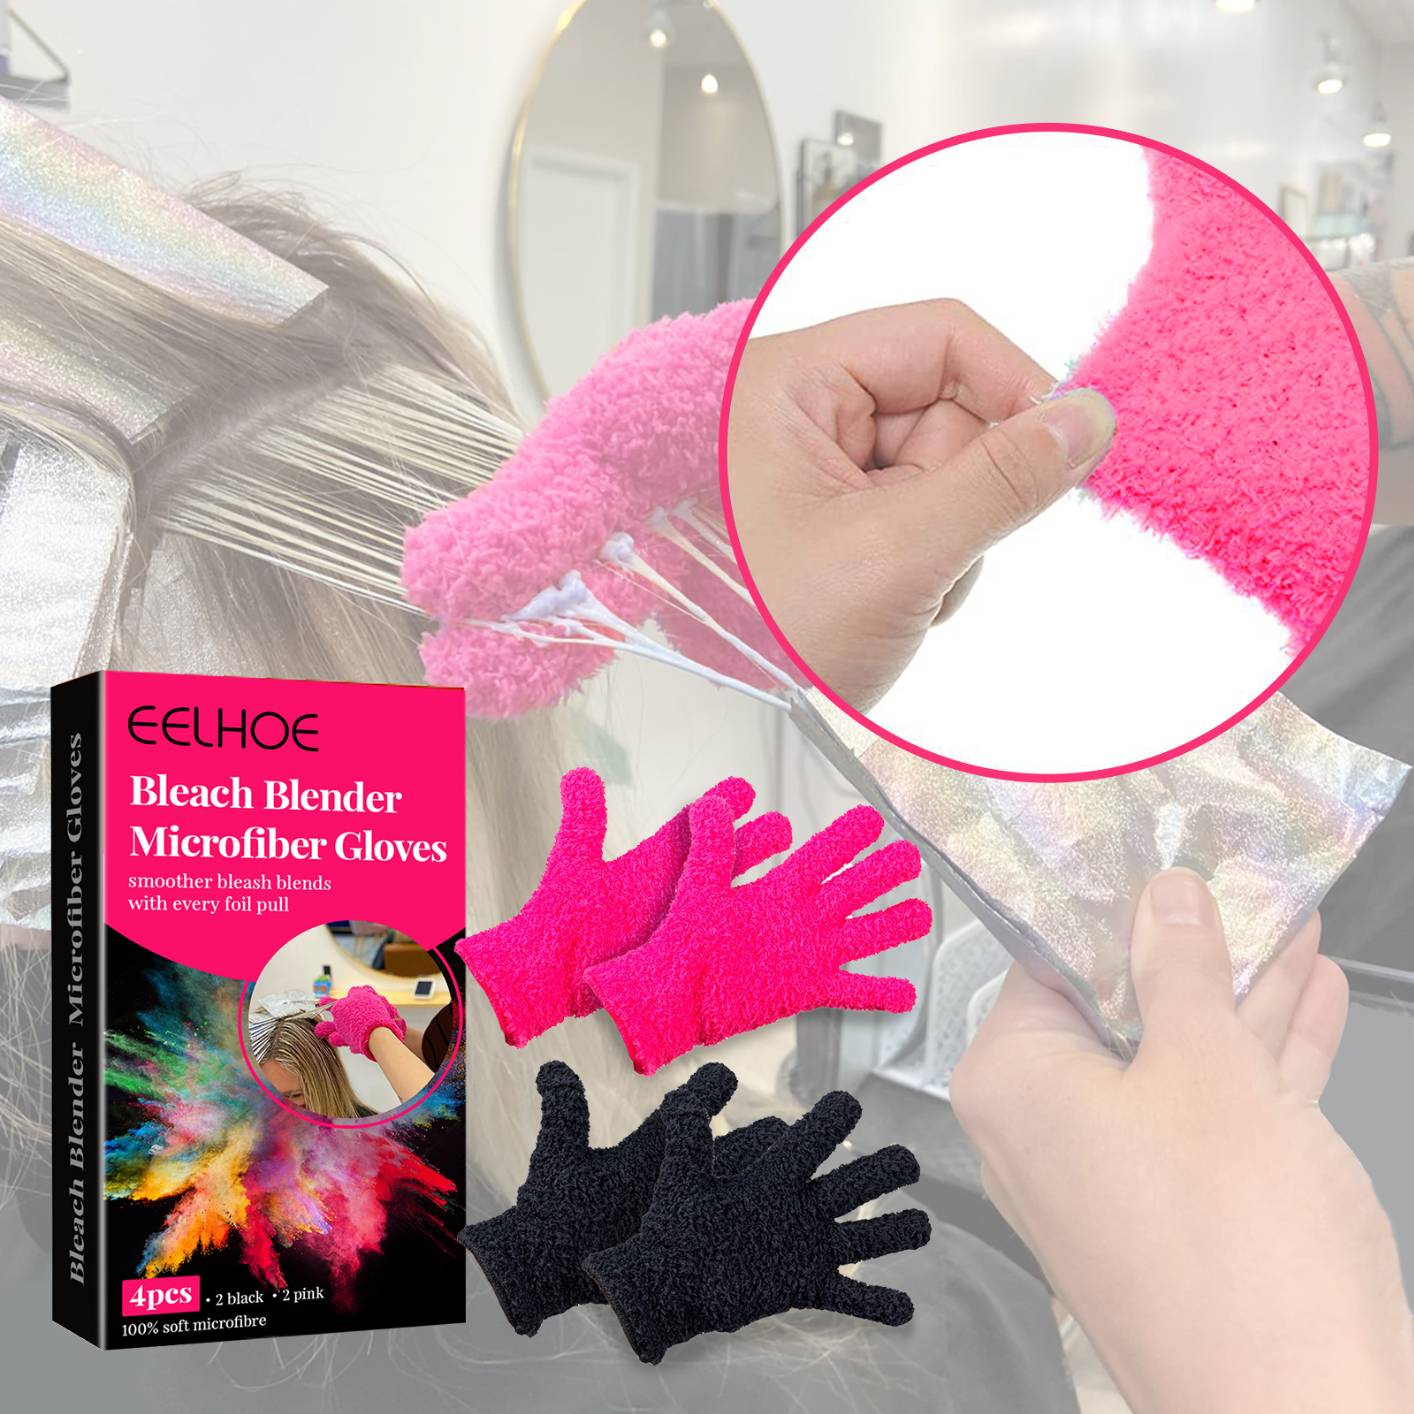 Bleach Blender Microfiber Gloves – Hair Dye Gloves, Pink Gloves For Hair Salon Supplies, Fuzzy Gloves, Reusable Gloves For Cleaning, Microfiber Mitt For Hairstylist Supplies, Hair Color Gloves